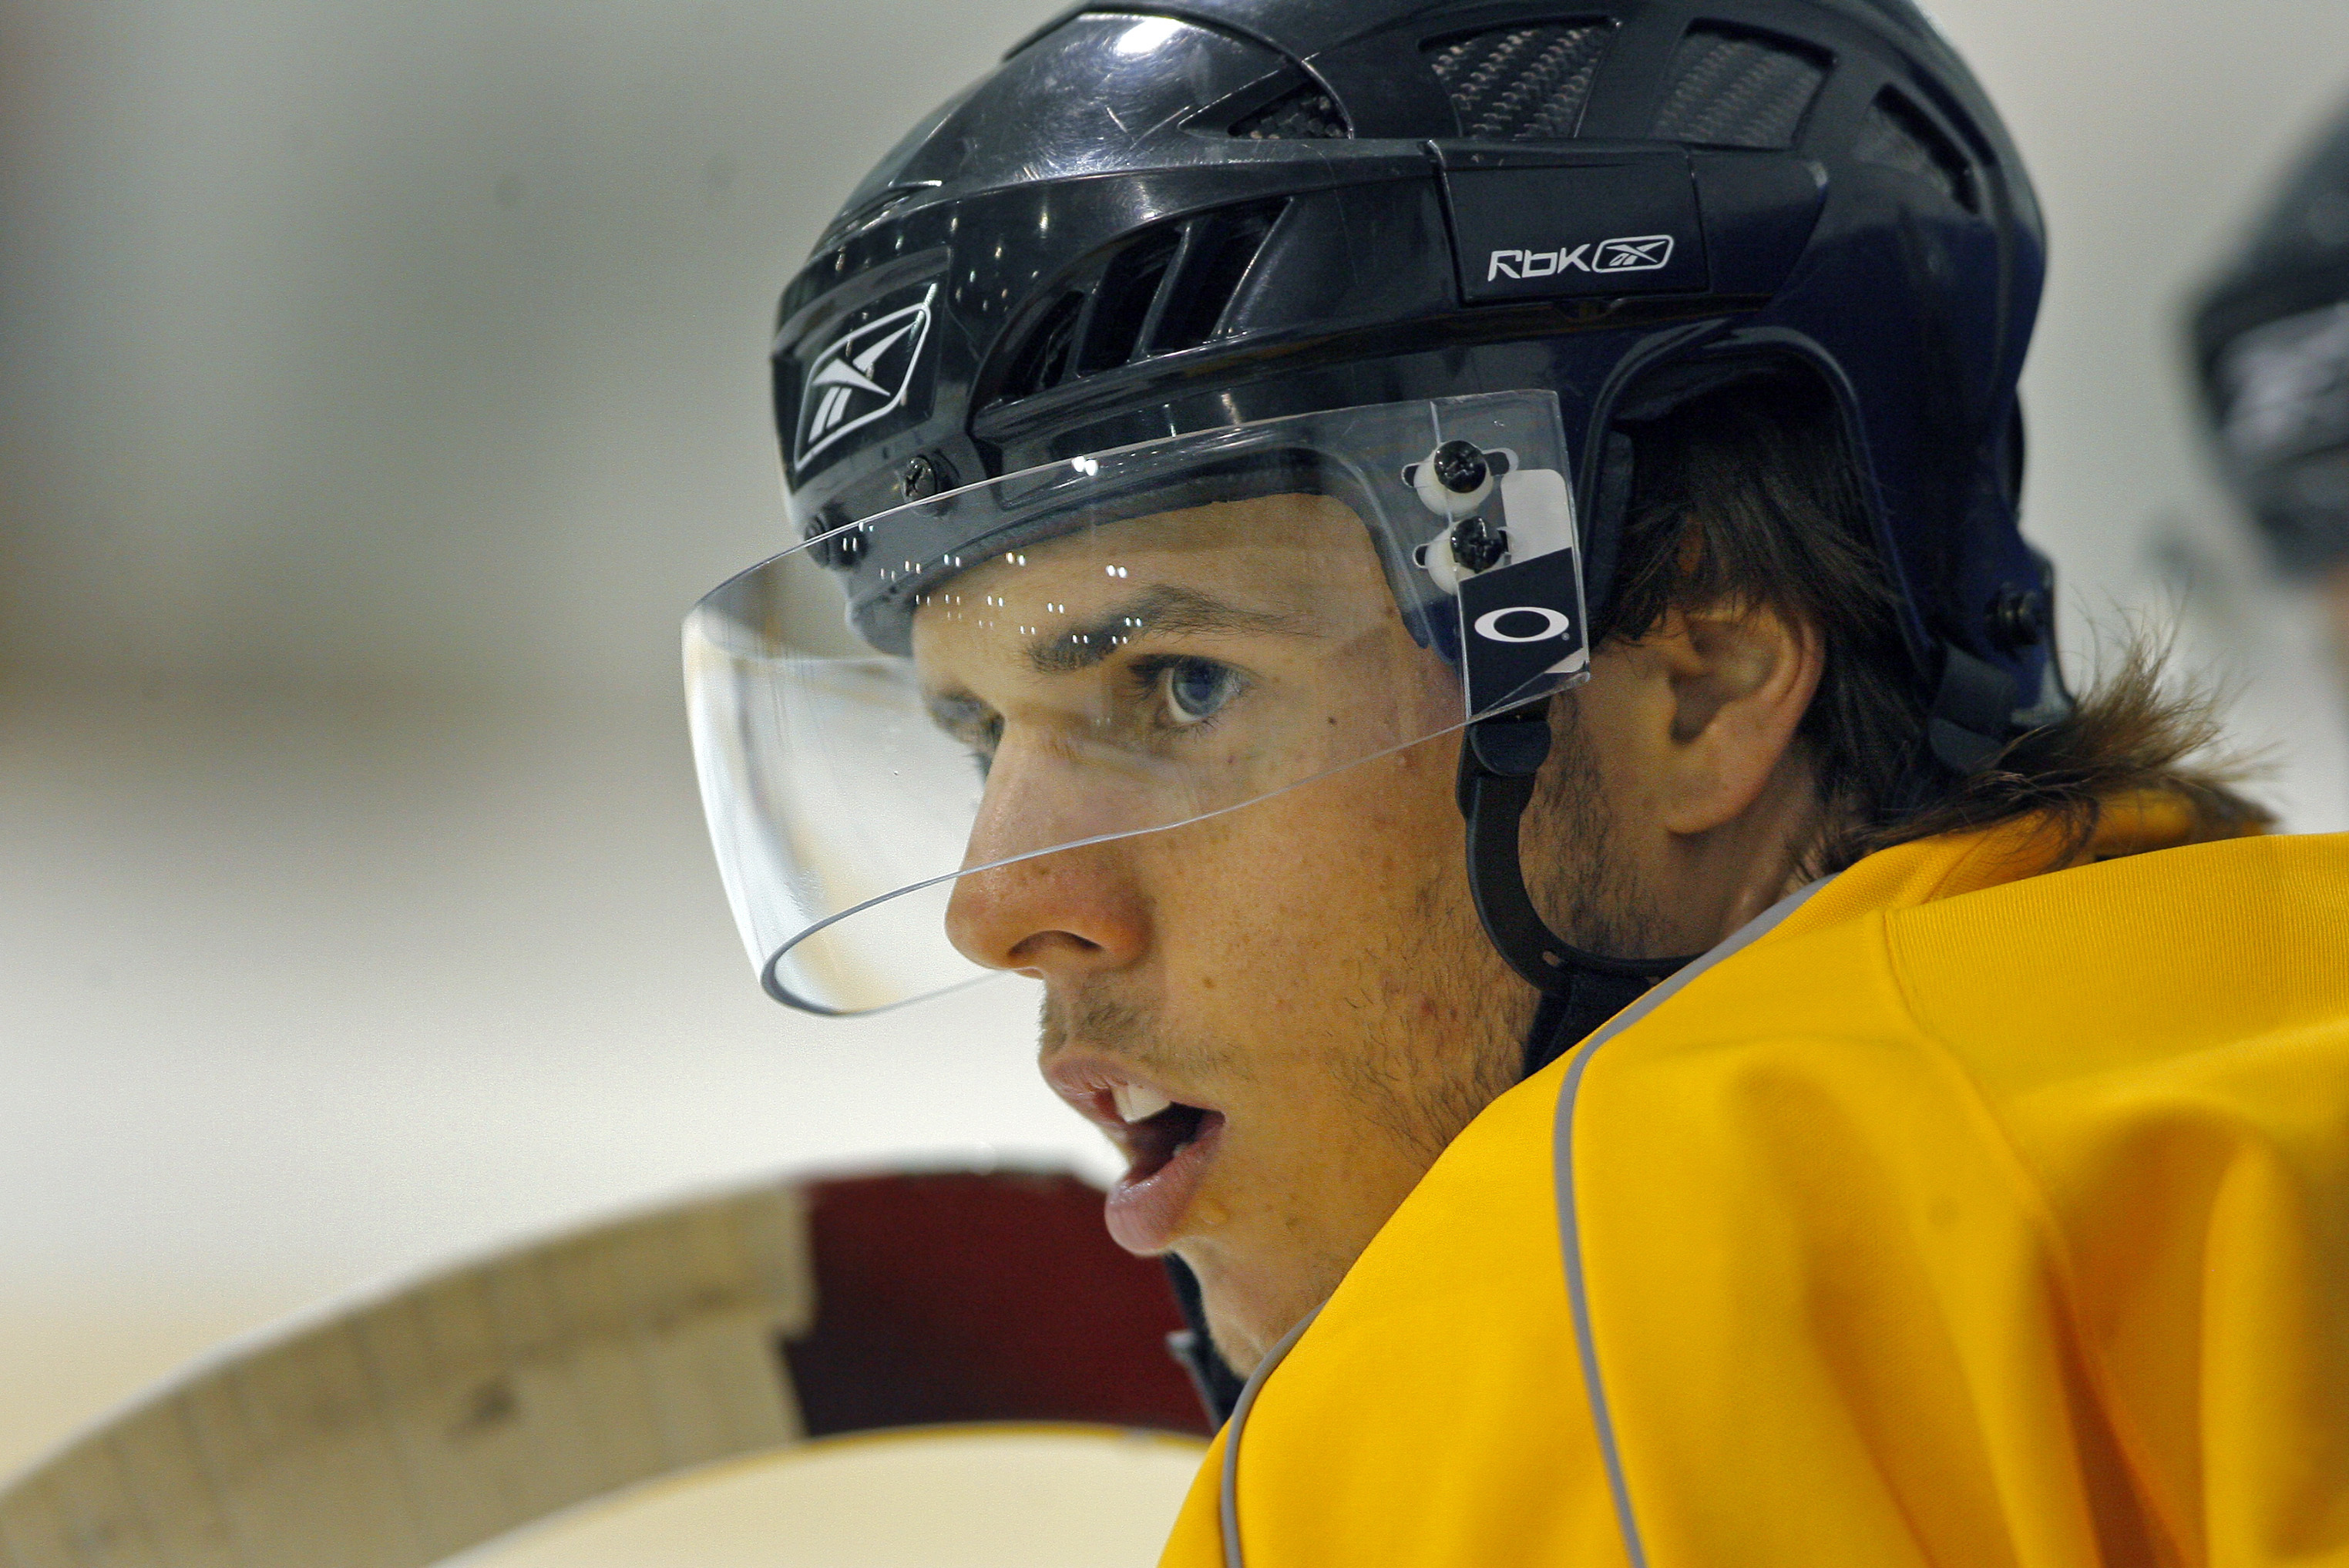 Bruins' David Krejci announces retirement after 16 seasons 